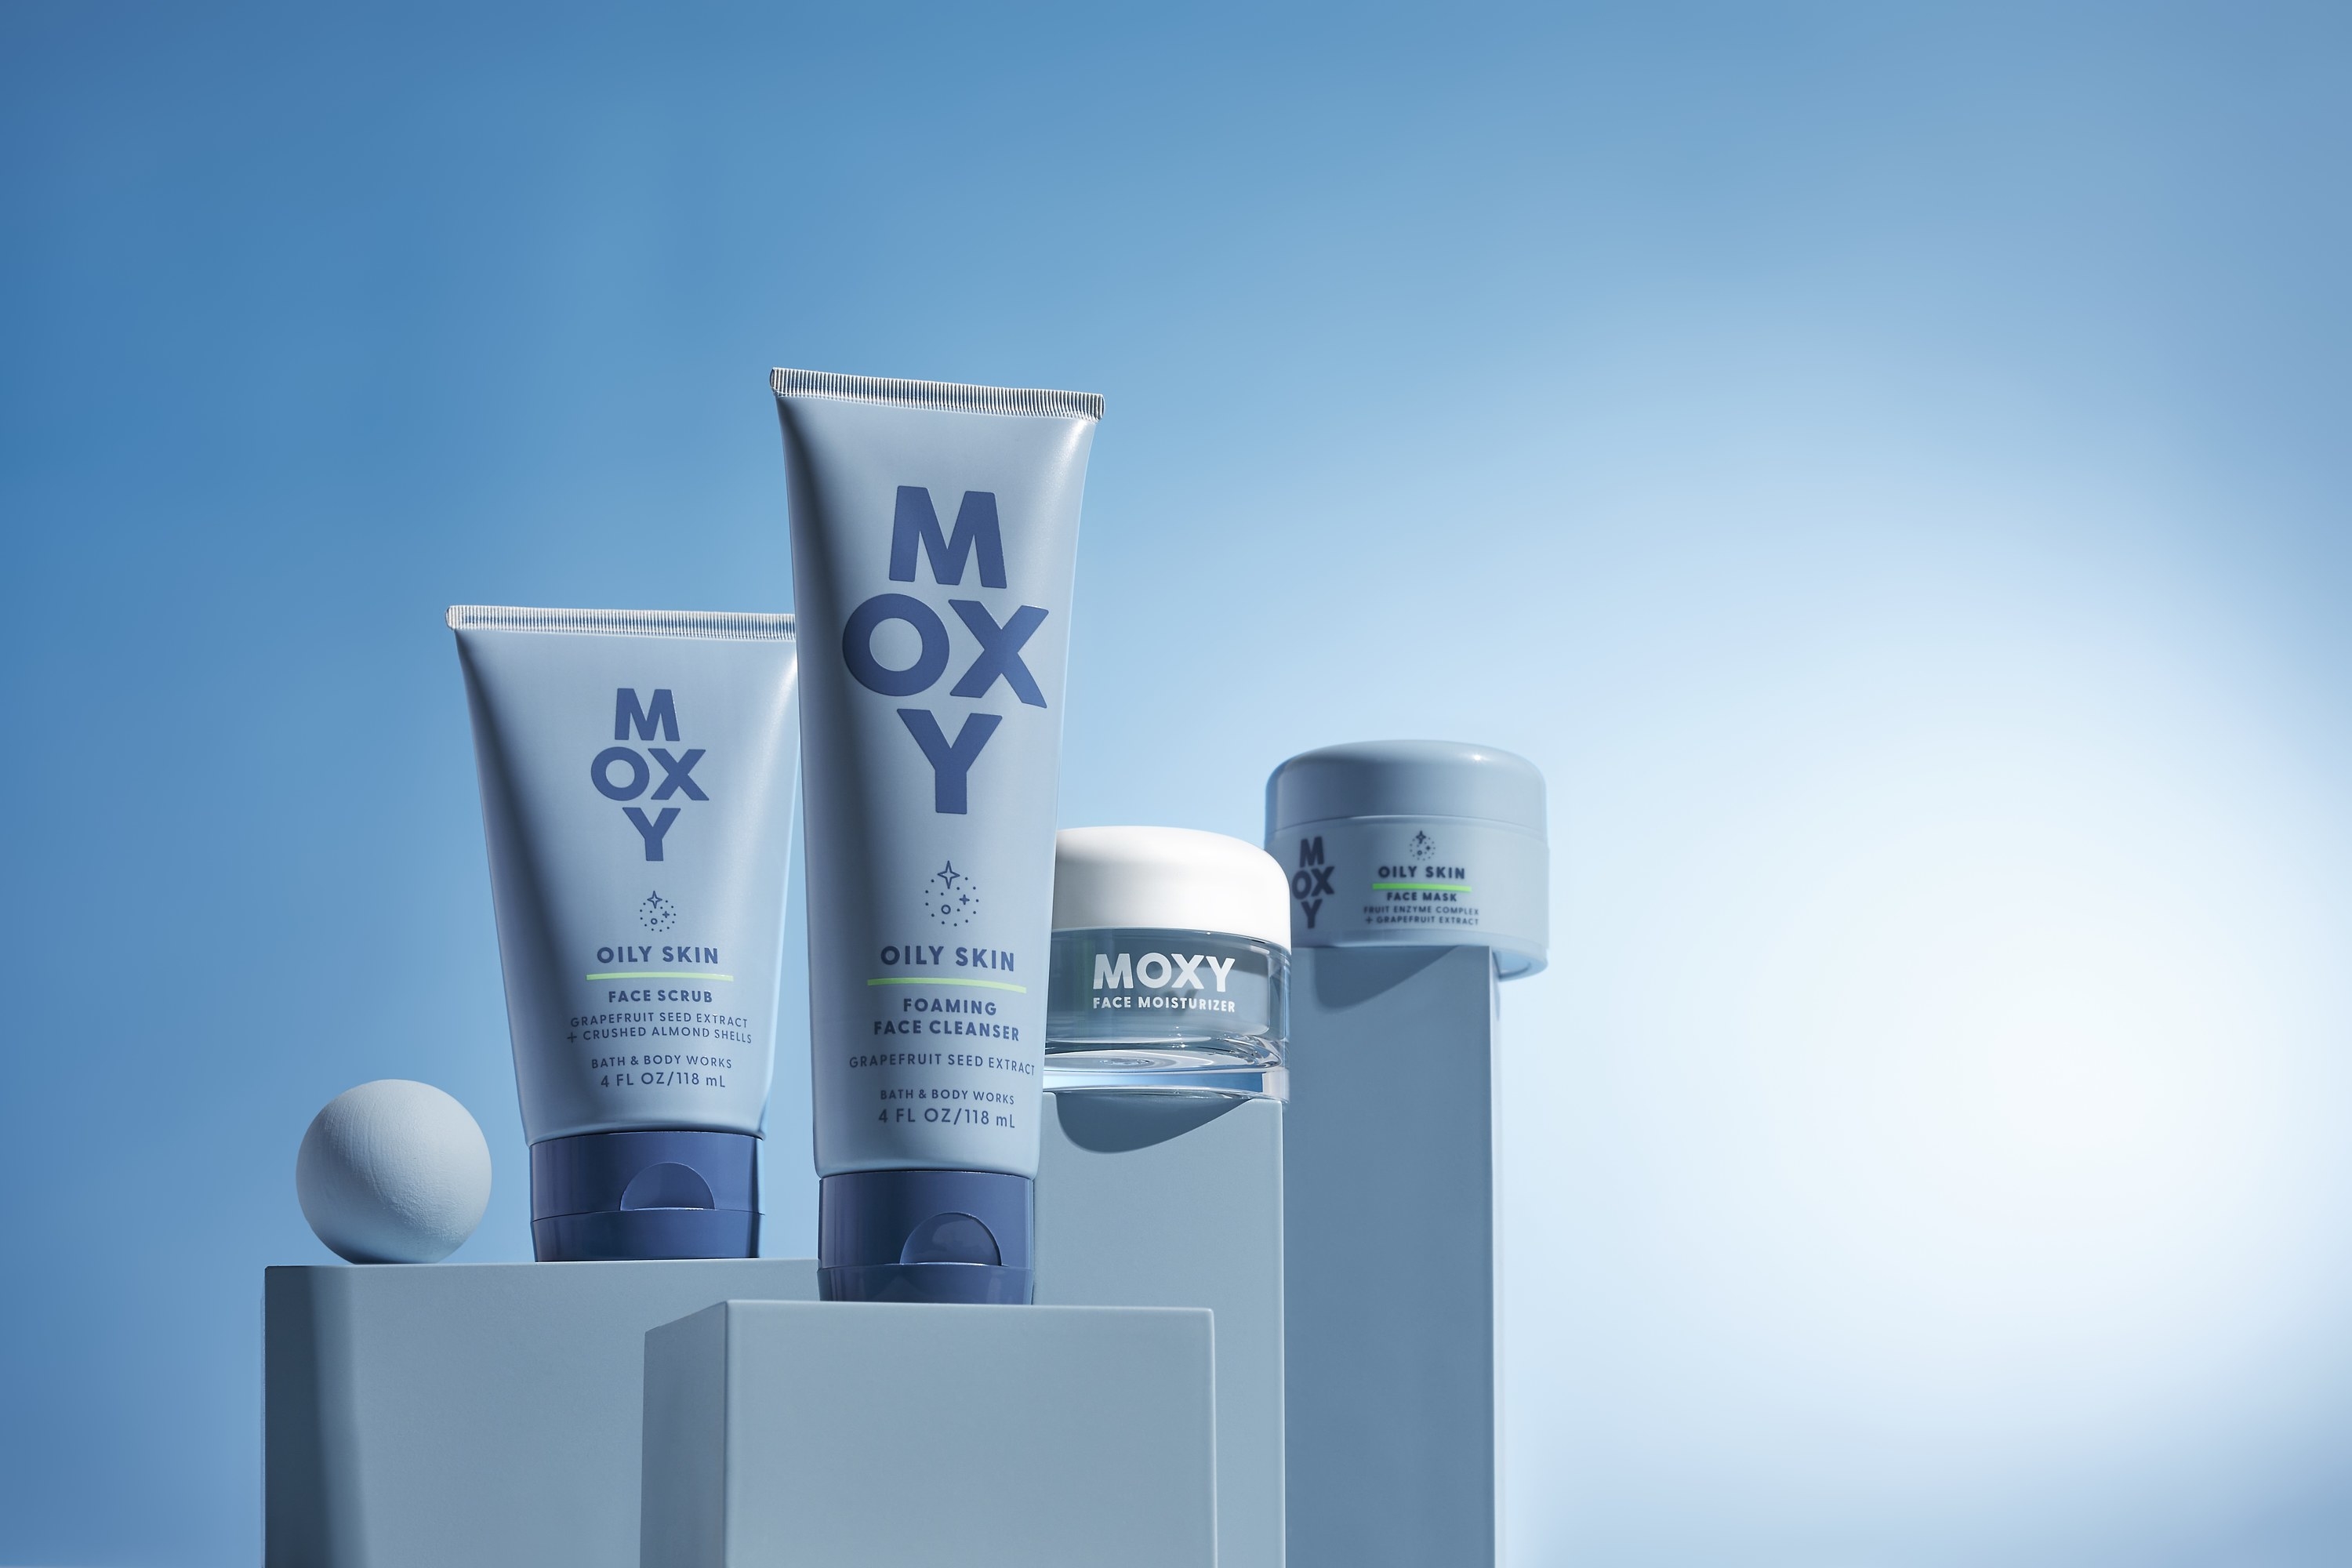 Moxy oily skin skincare line